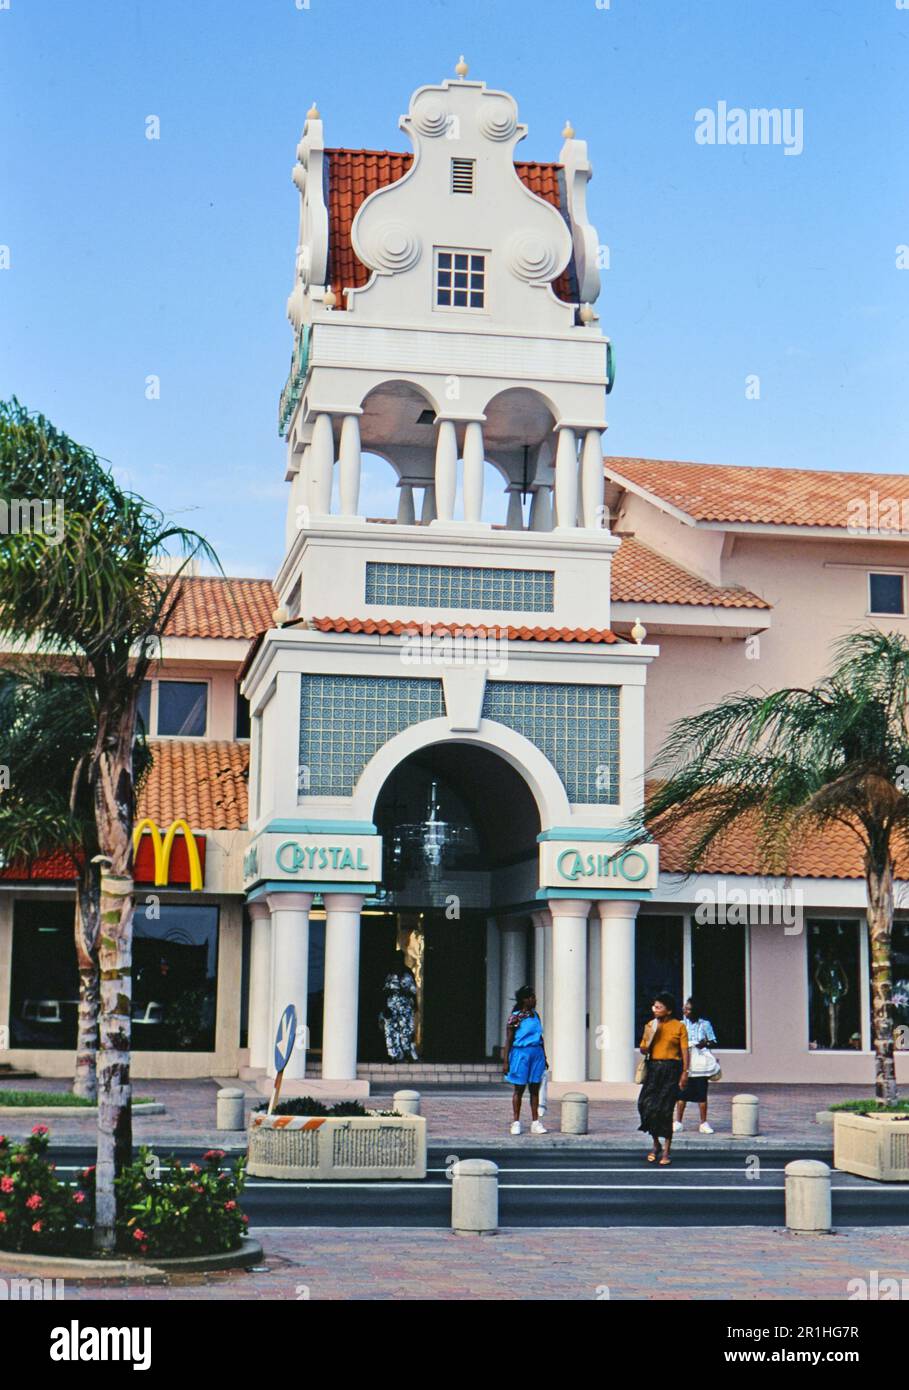 Renaissance mall aruba hi-res stock photography and images - Alamy